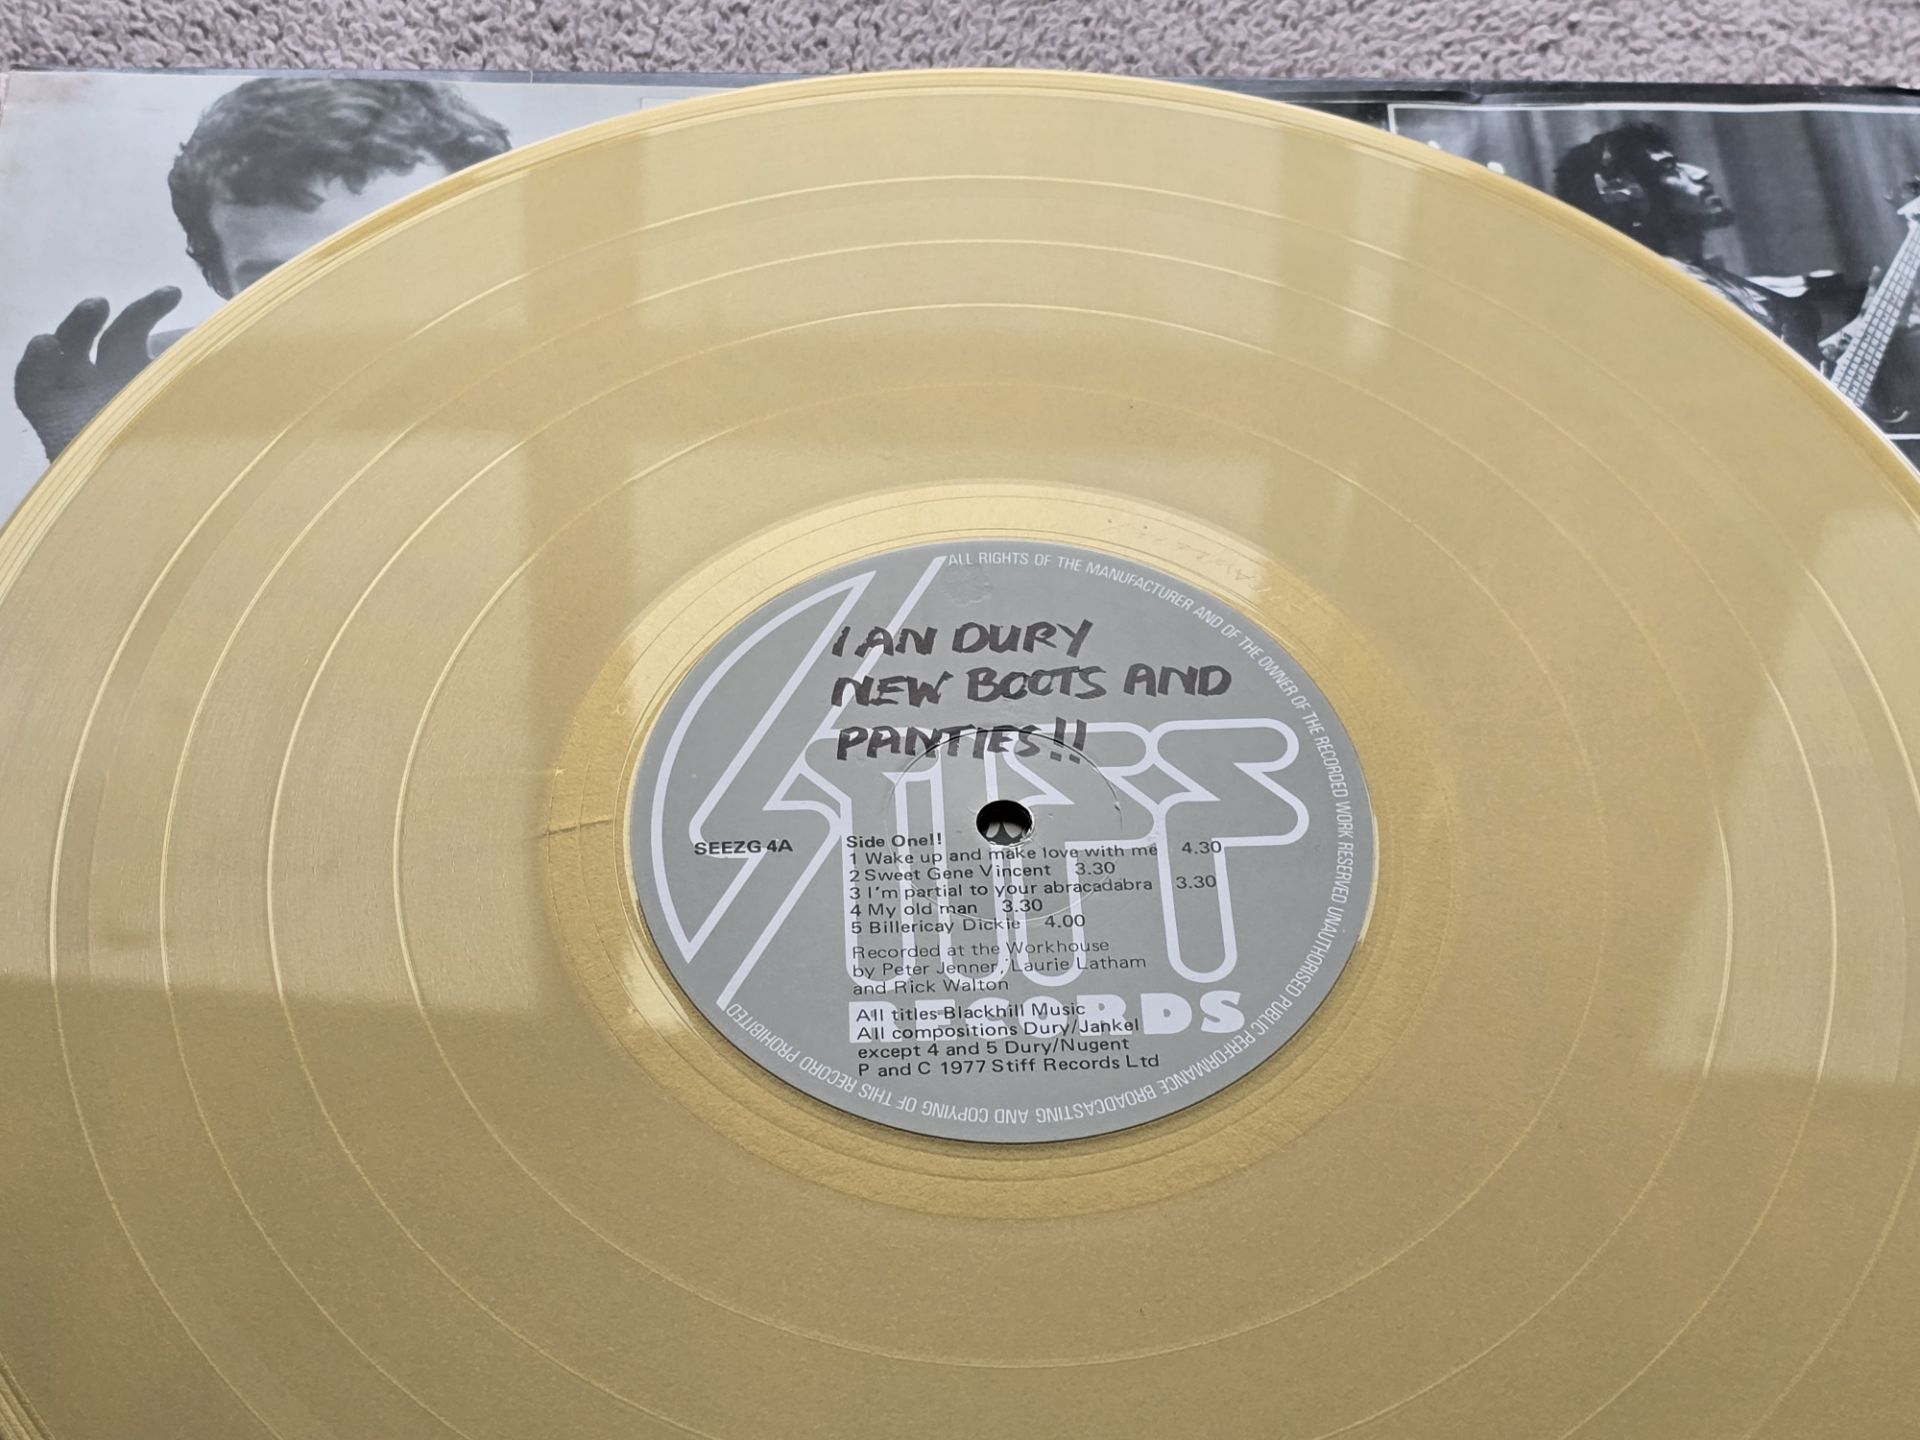 Ian Dury – New Boots And Panties!! Gold Vinyl 1978 LP + Bonus Hidden Track - Image 7 of 8